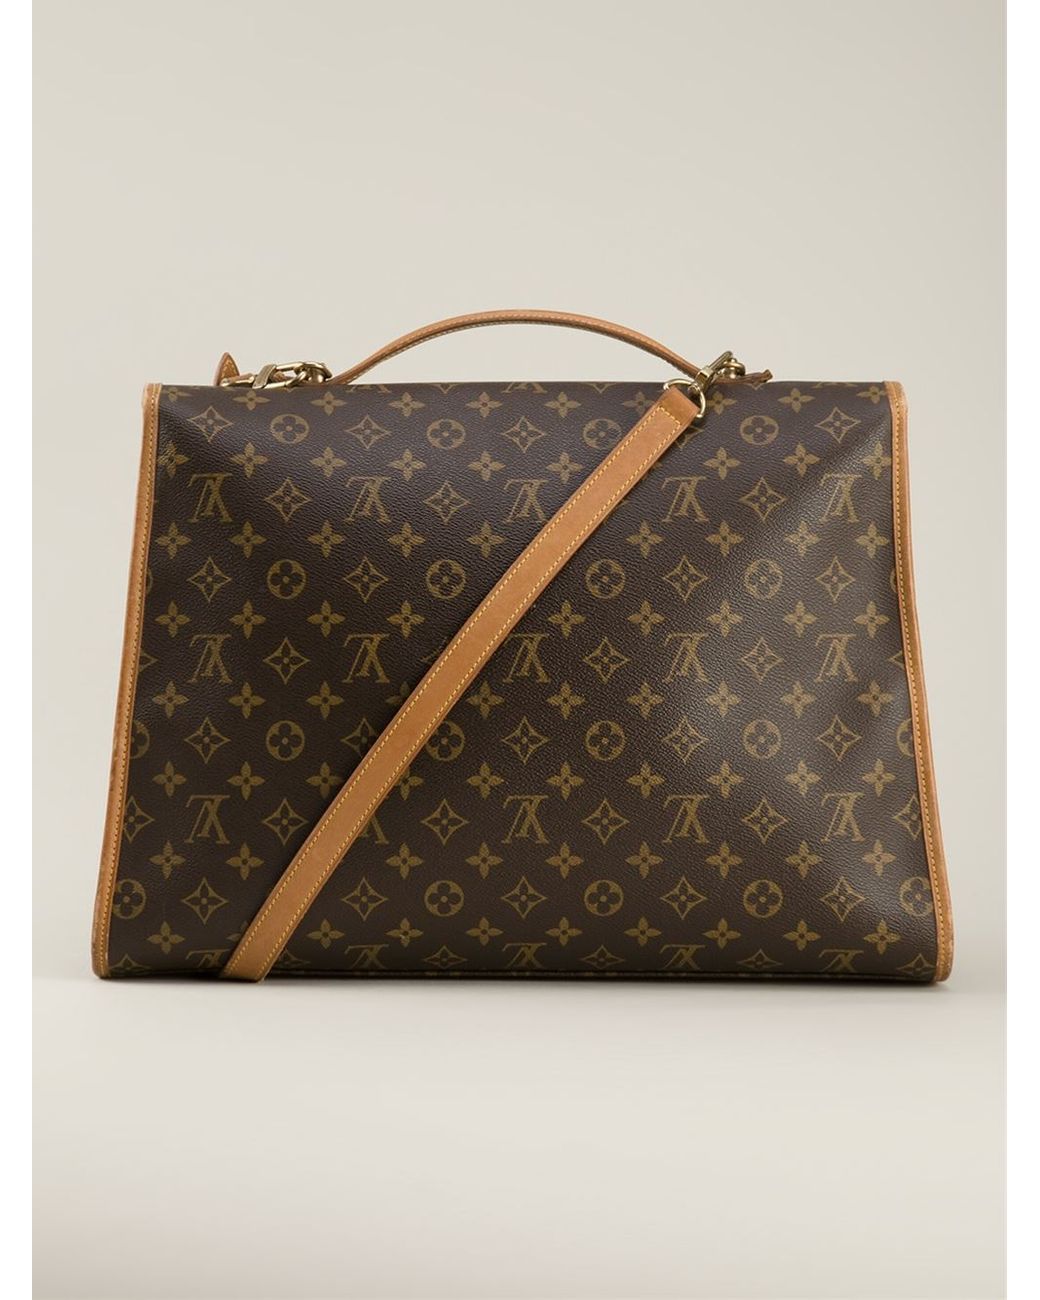 Louis Vuitton Monogram Canvas Vintage Beverly Briefcase GM Bag